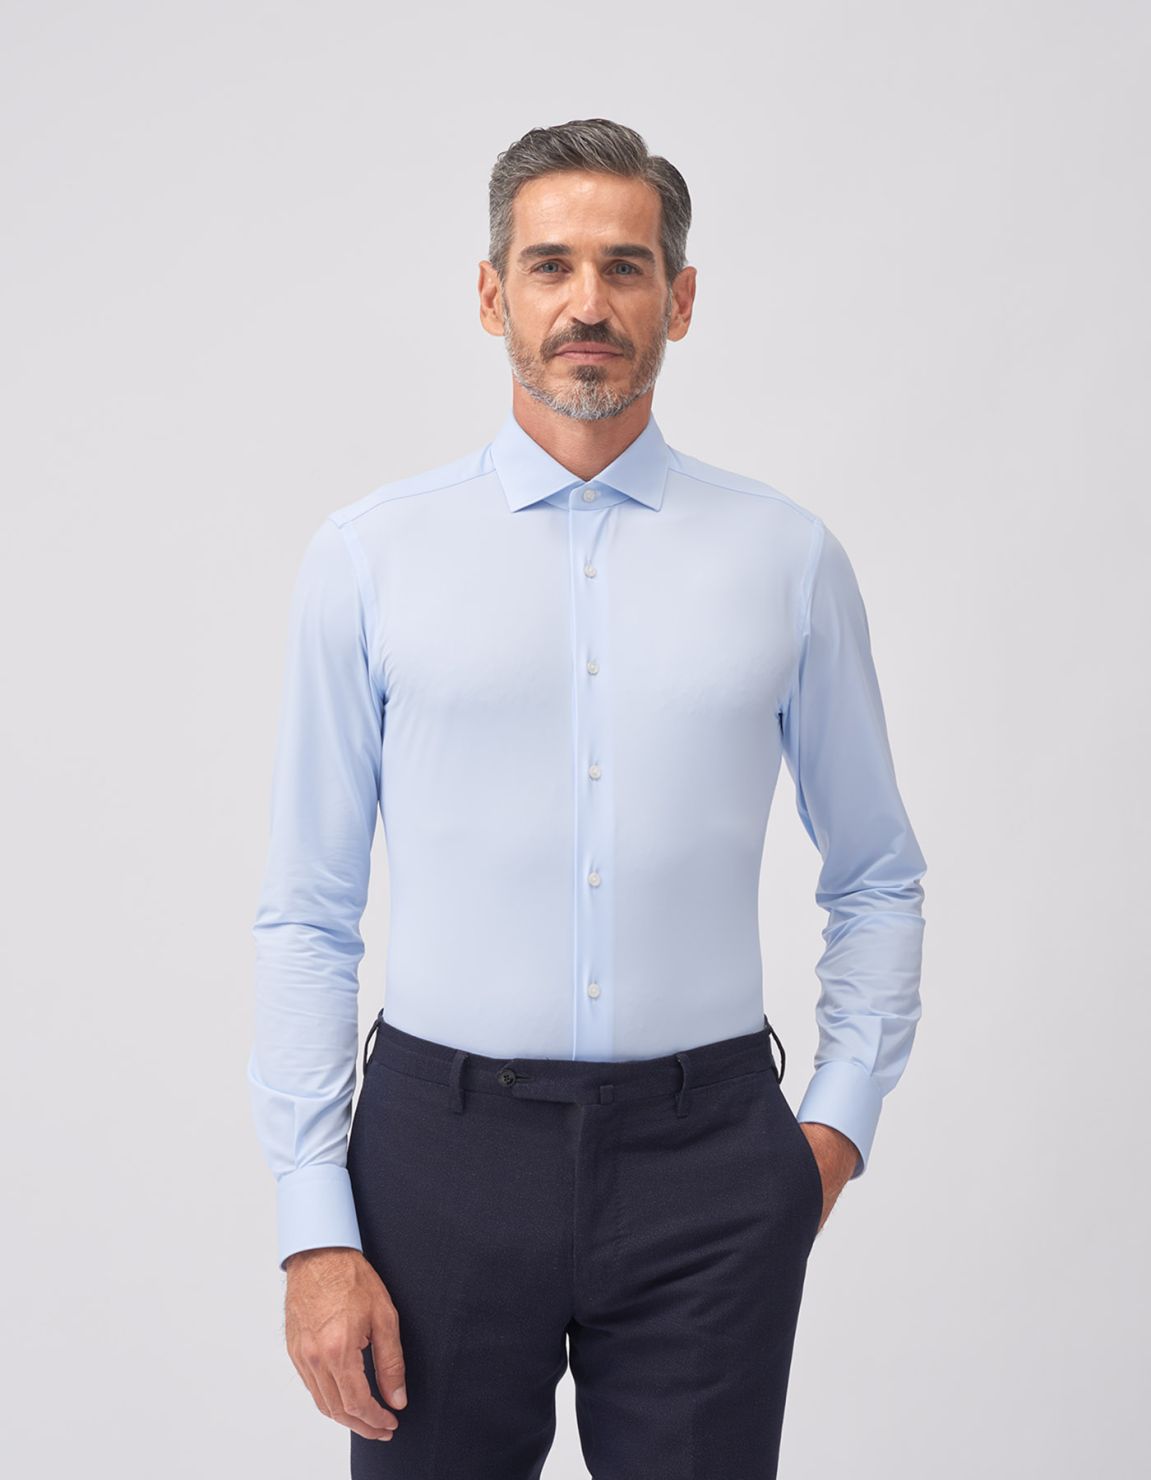 Shirt Collar small cutaway Light Blue Oxford Slim Fit 6